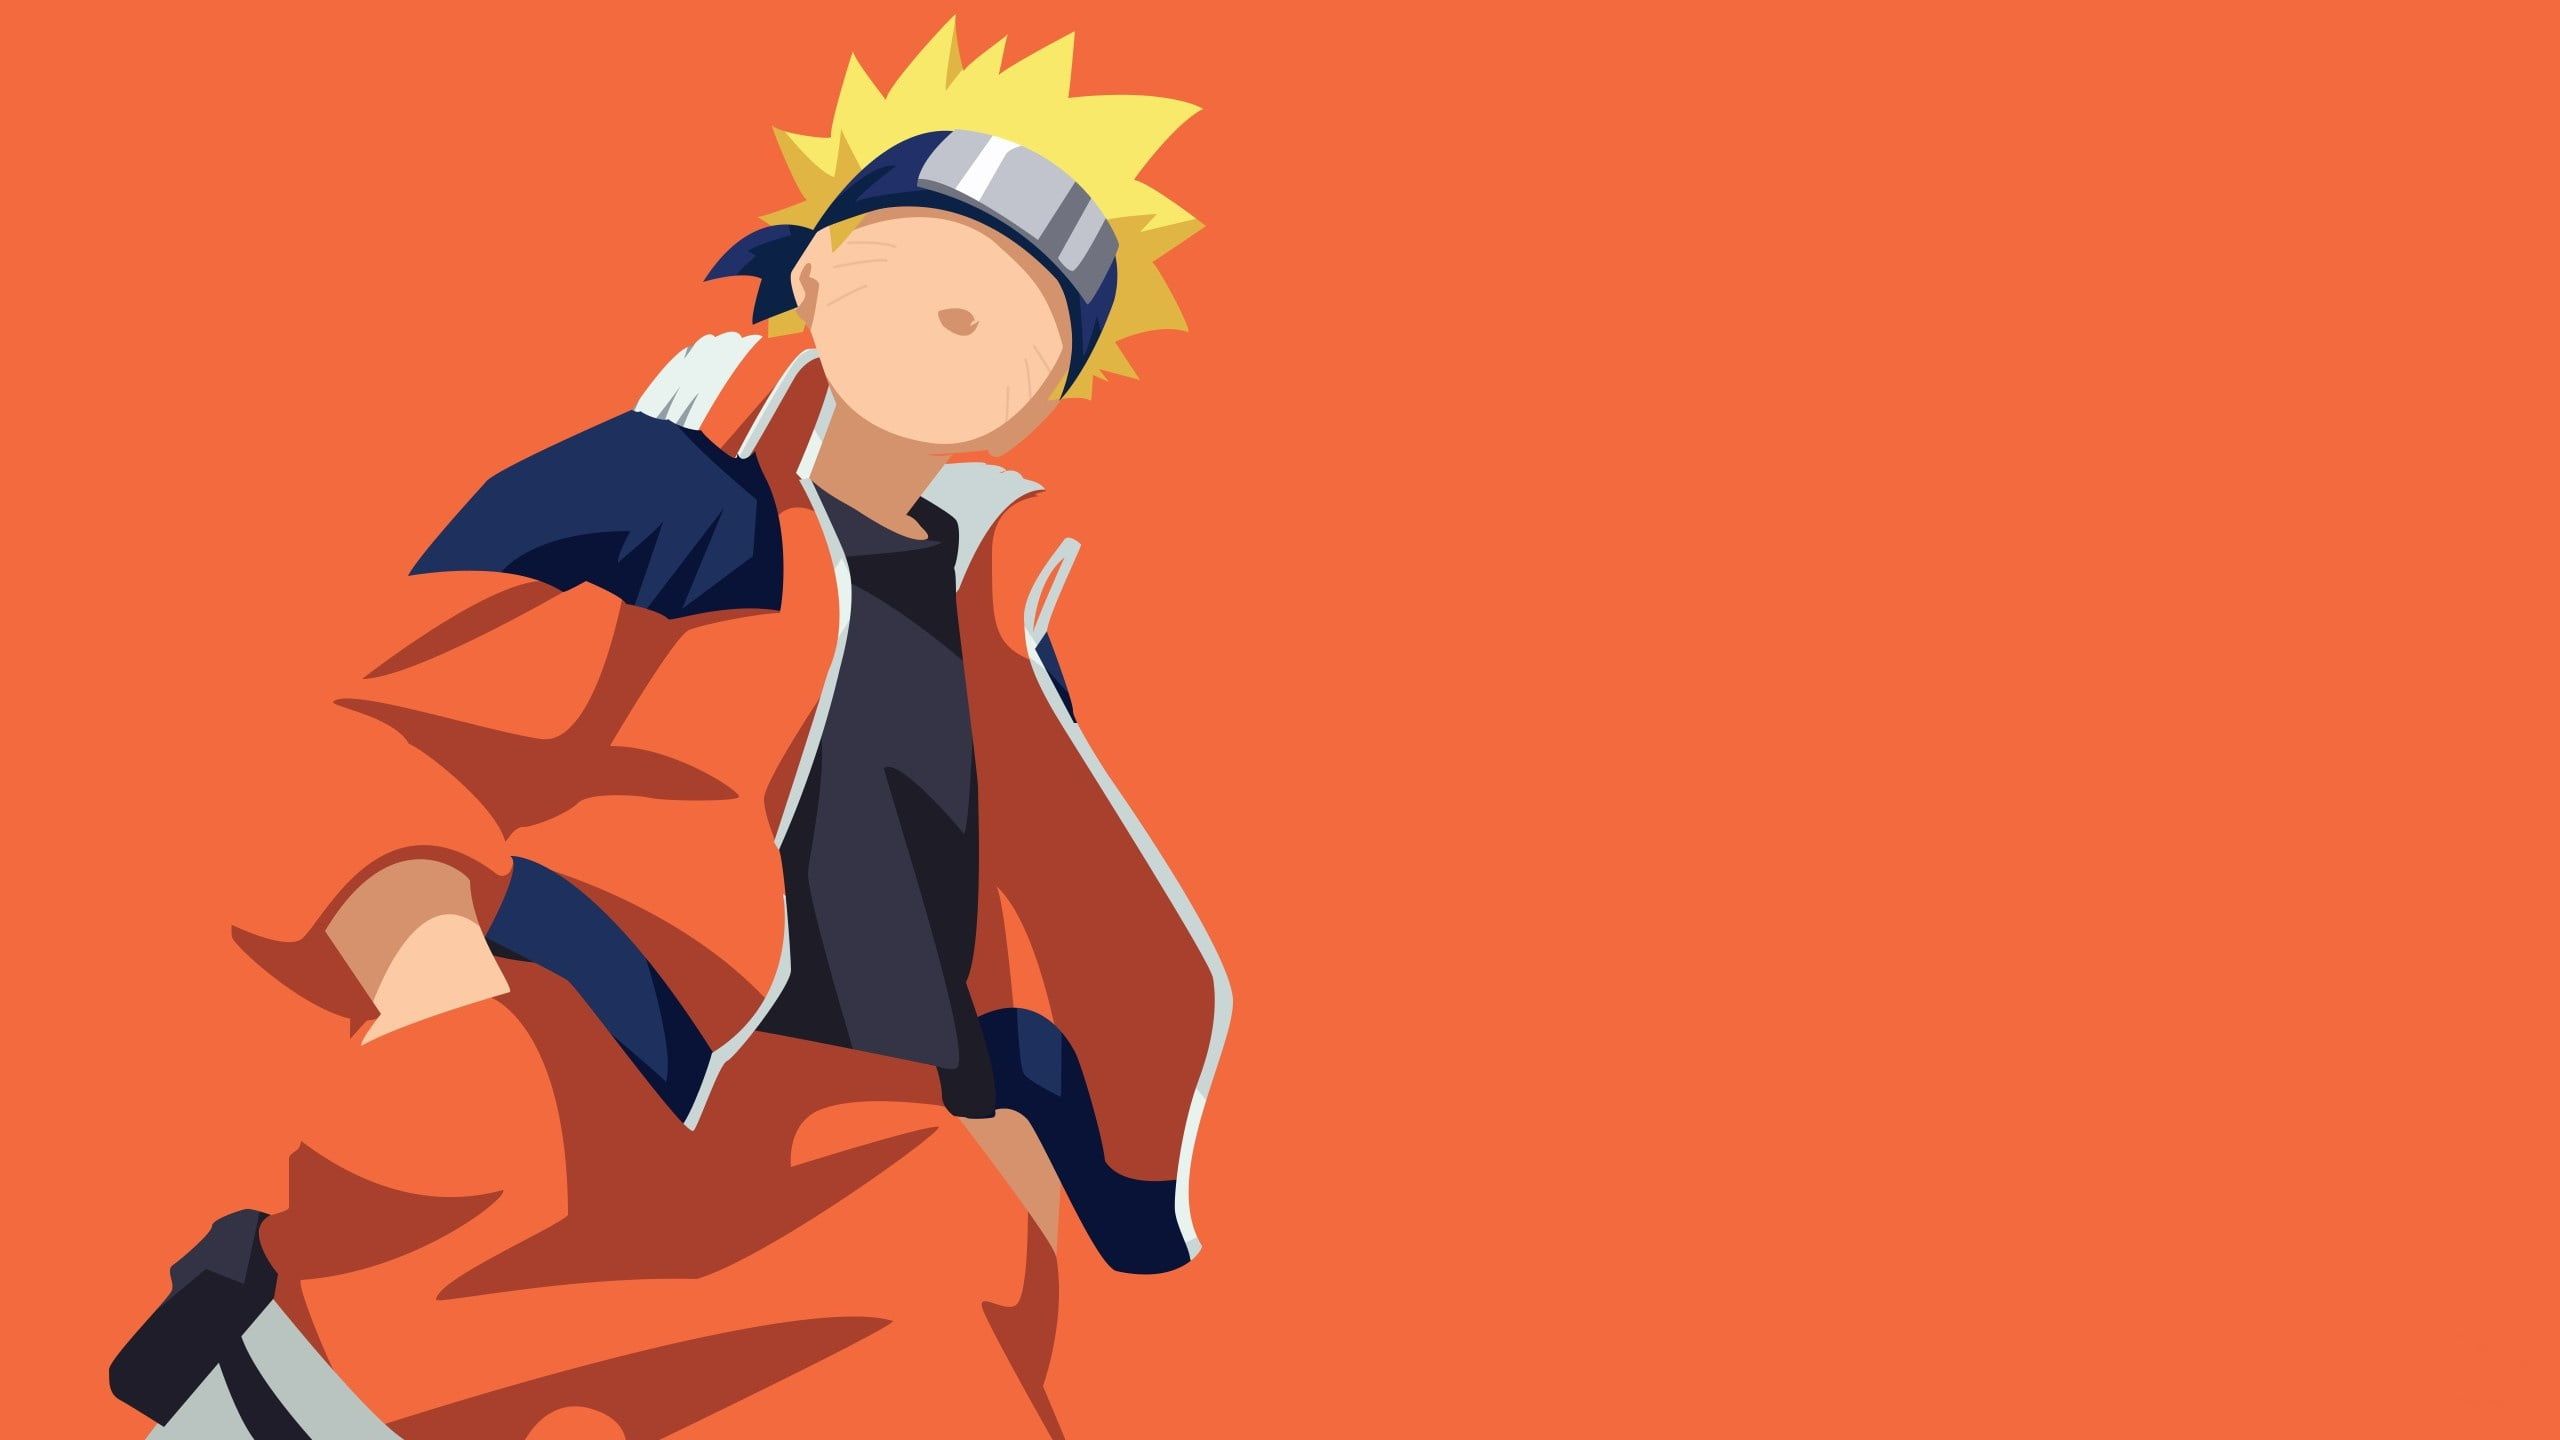 game #Naruto #minimalism #anime #orange #ninja #hero #asian #manga